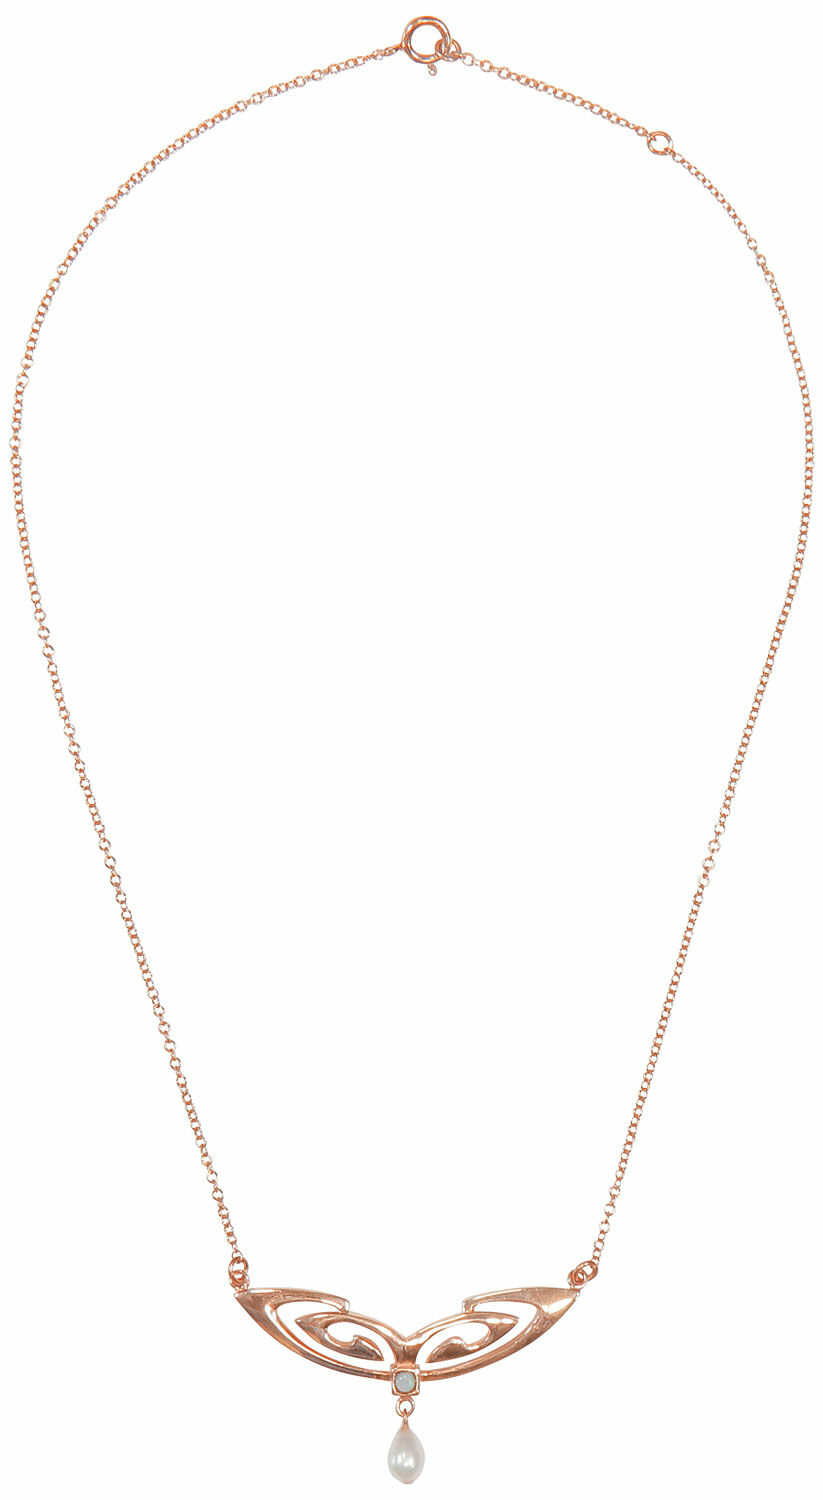 Art Nouveau necklace "Josephine" with pearl